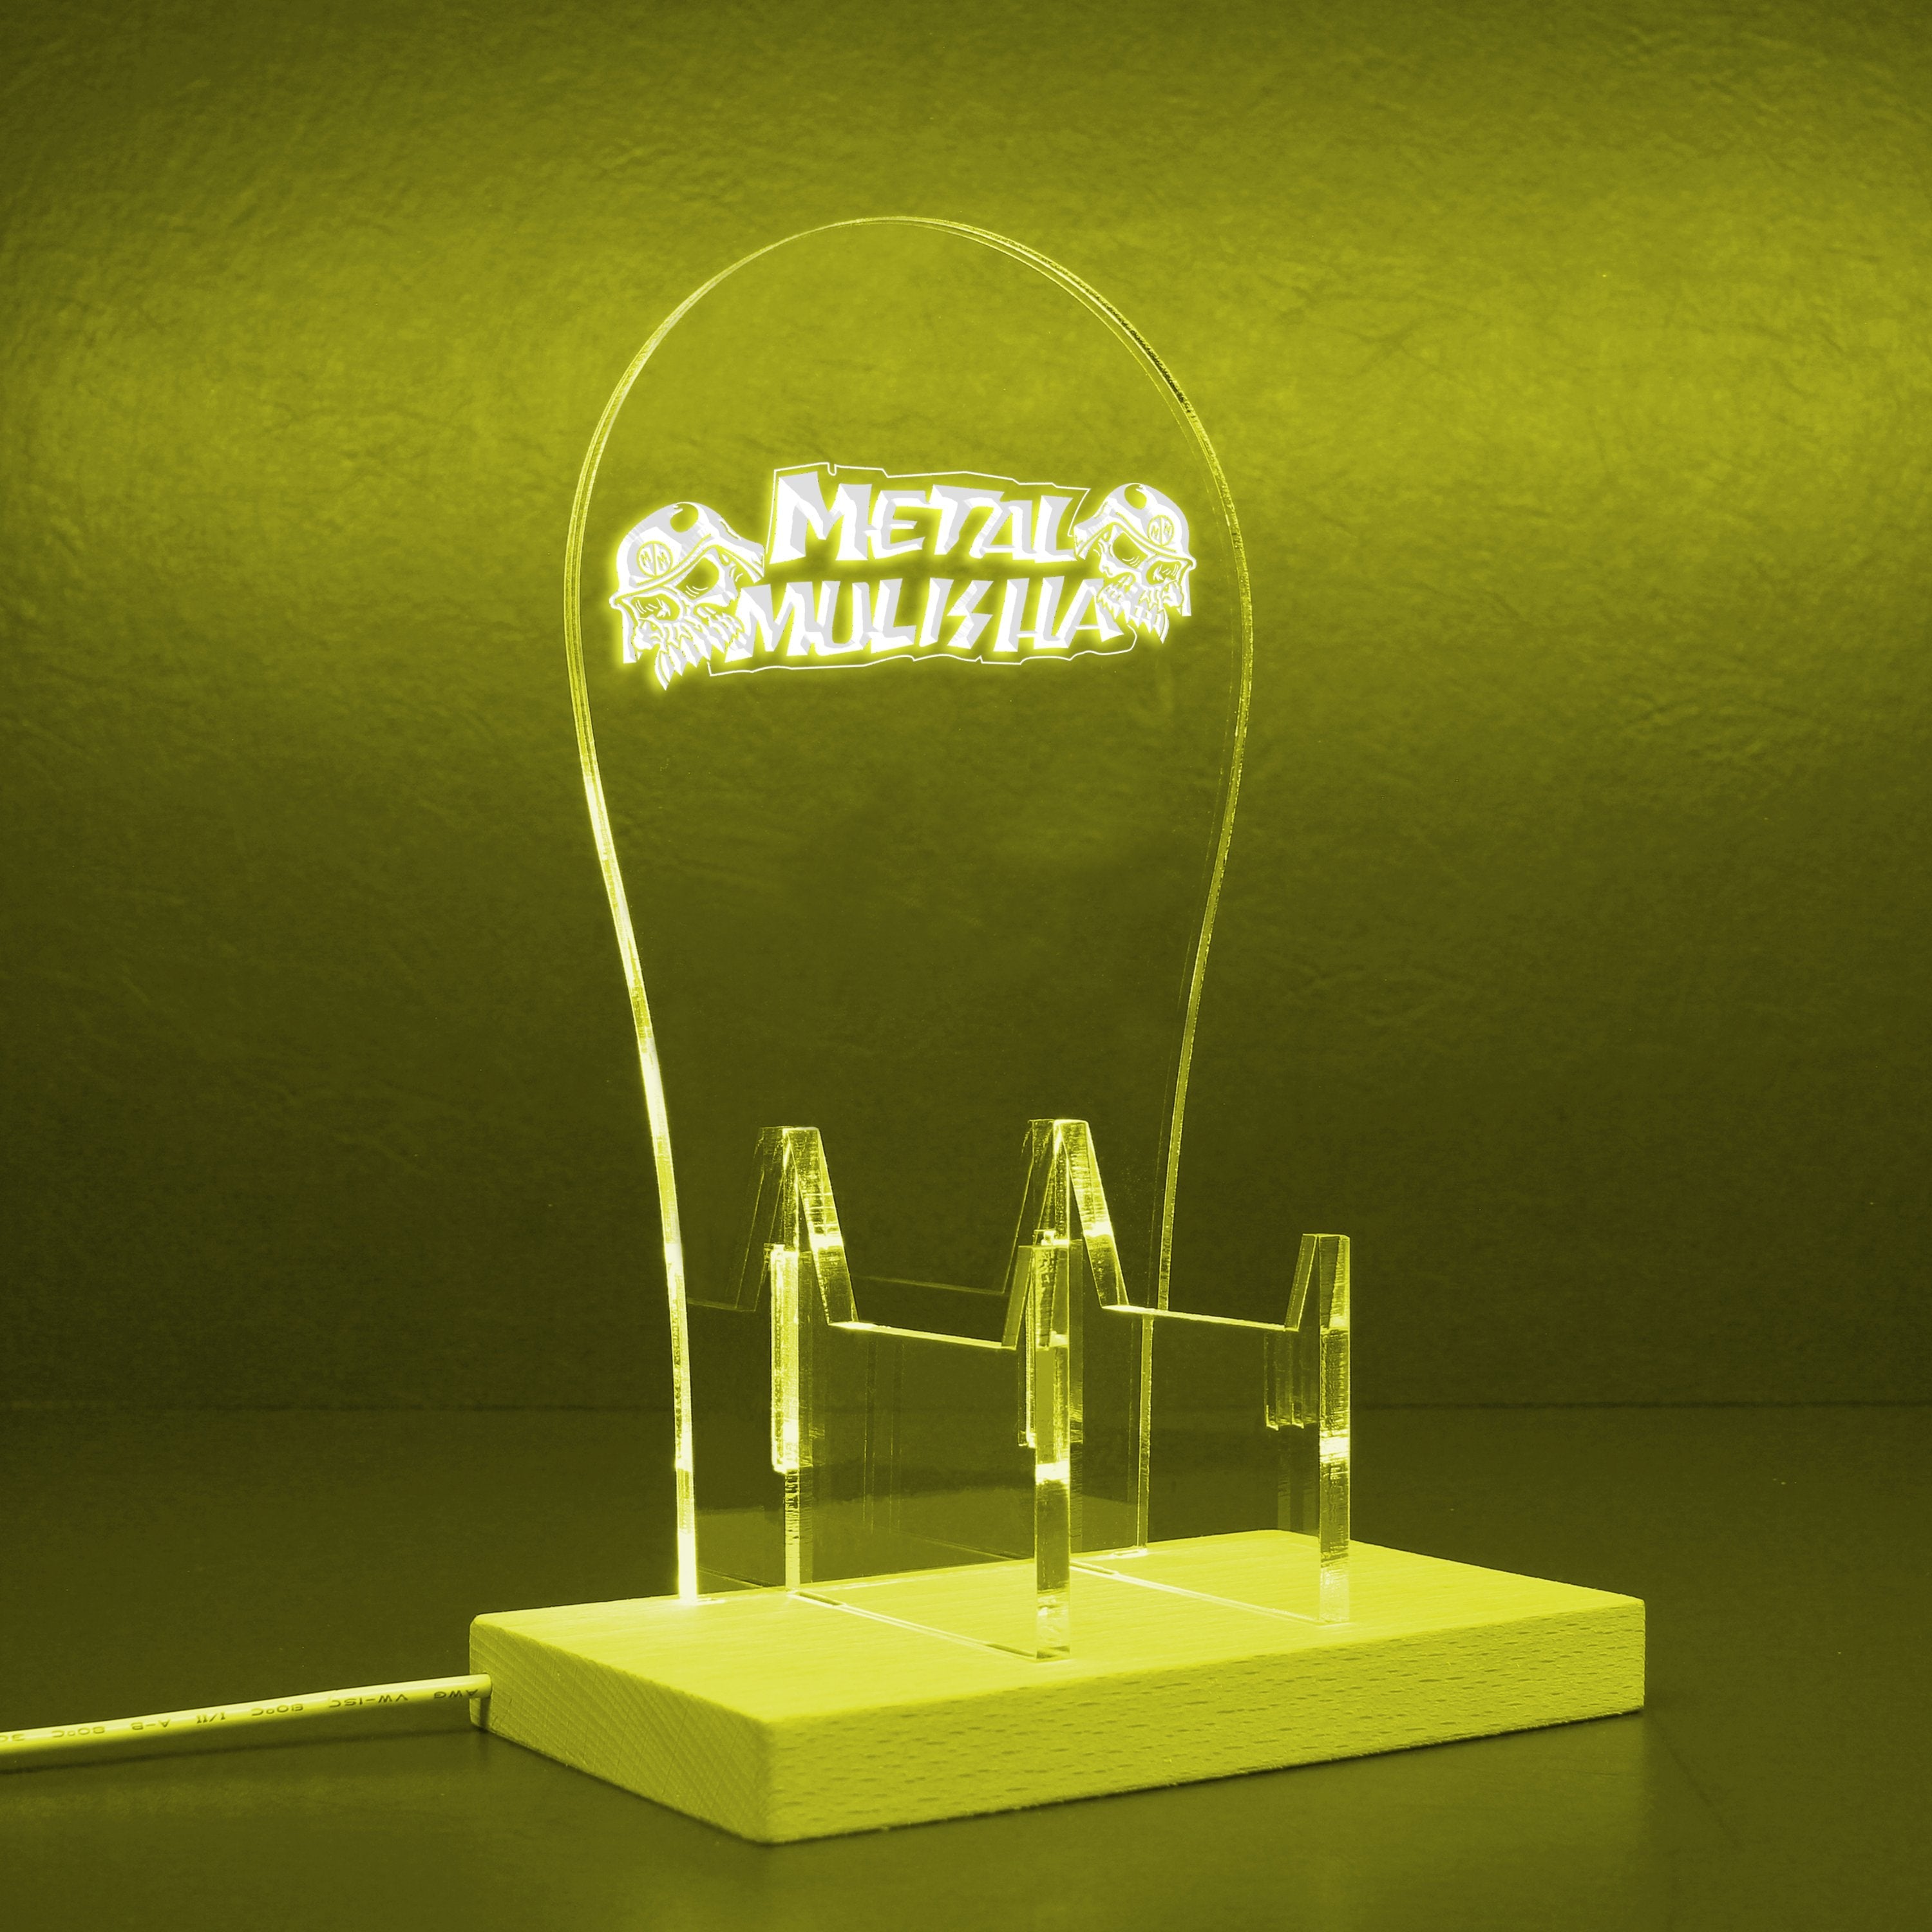 Metal Mulisha 2 LED Gaming Headset Controller Stand